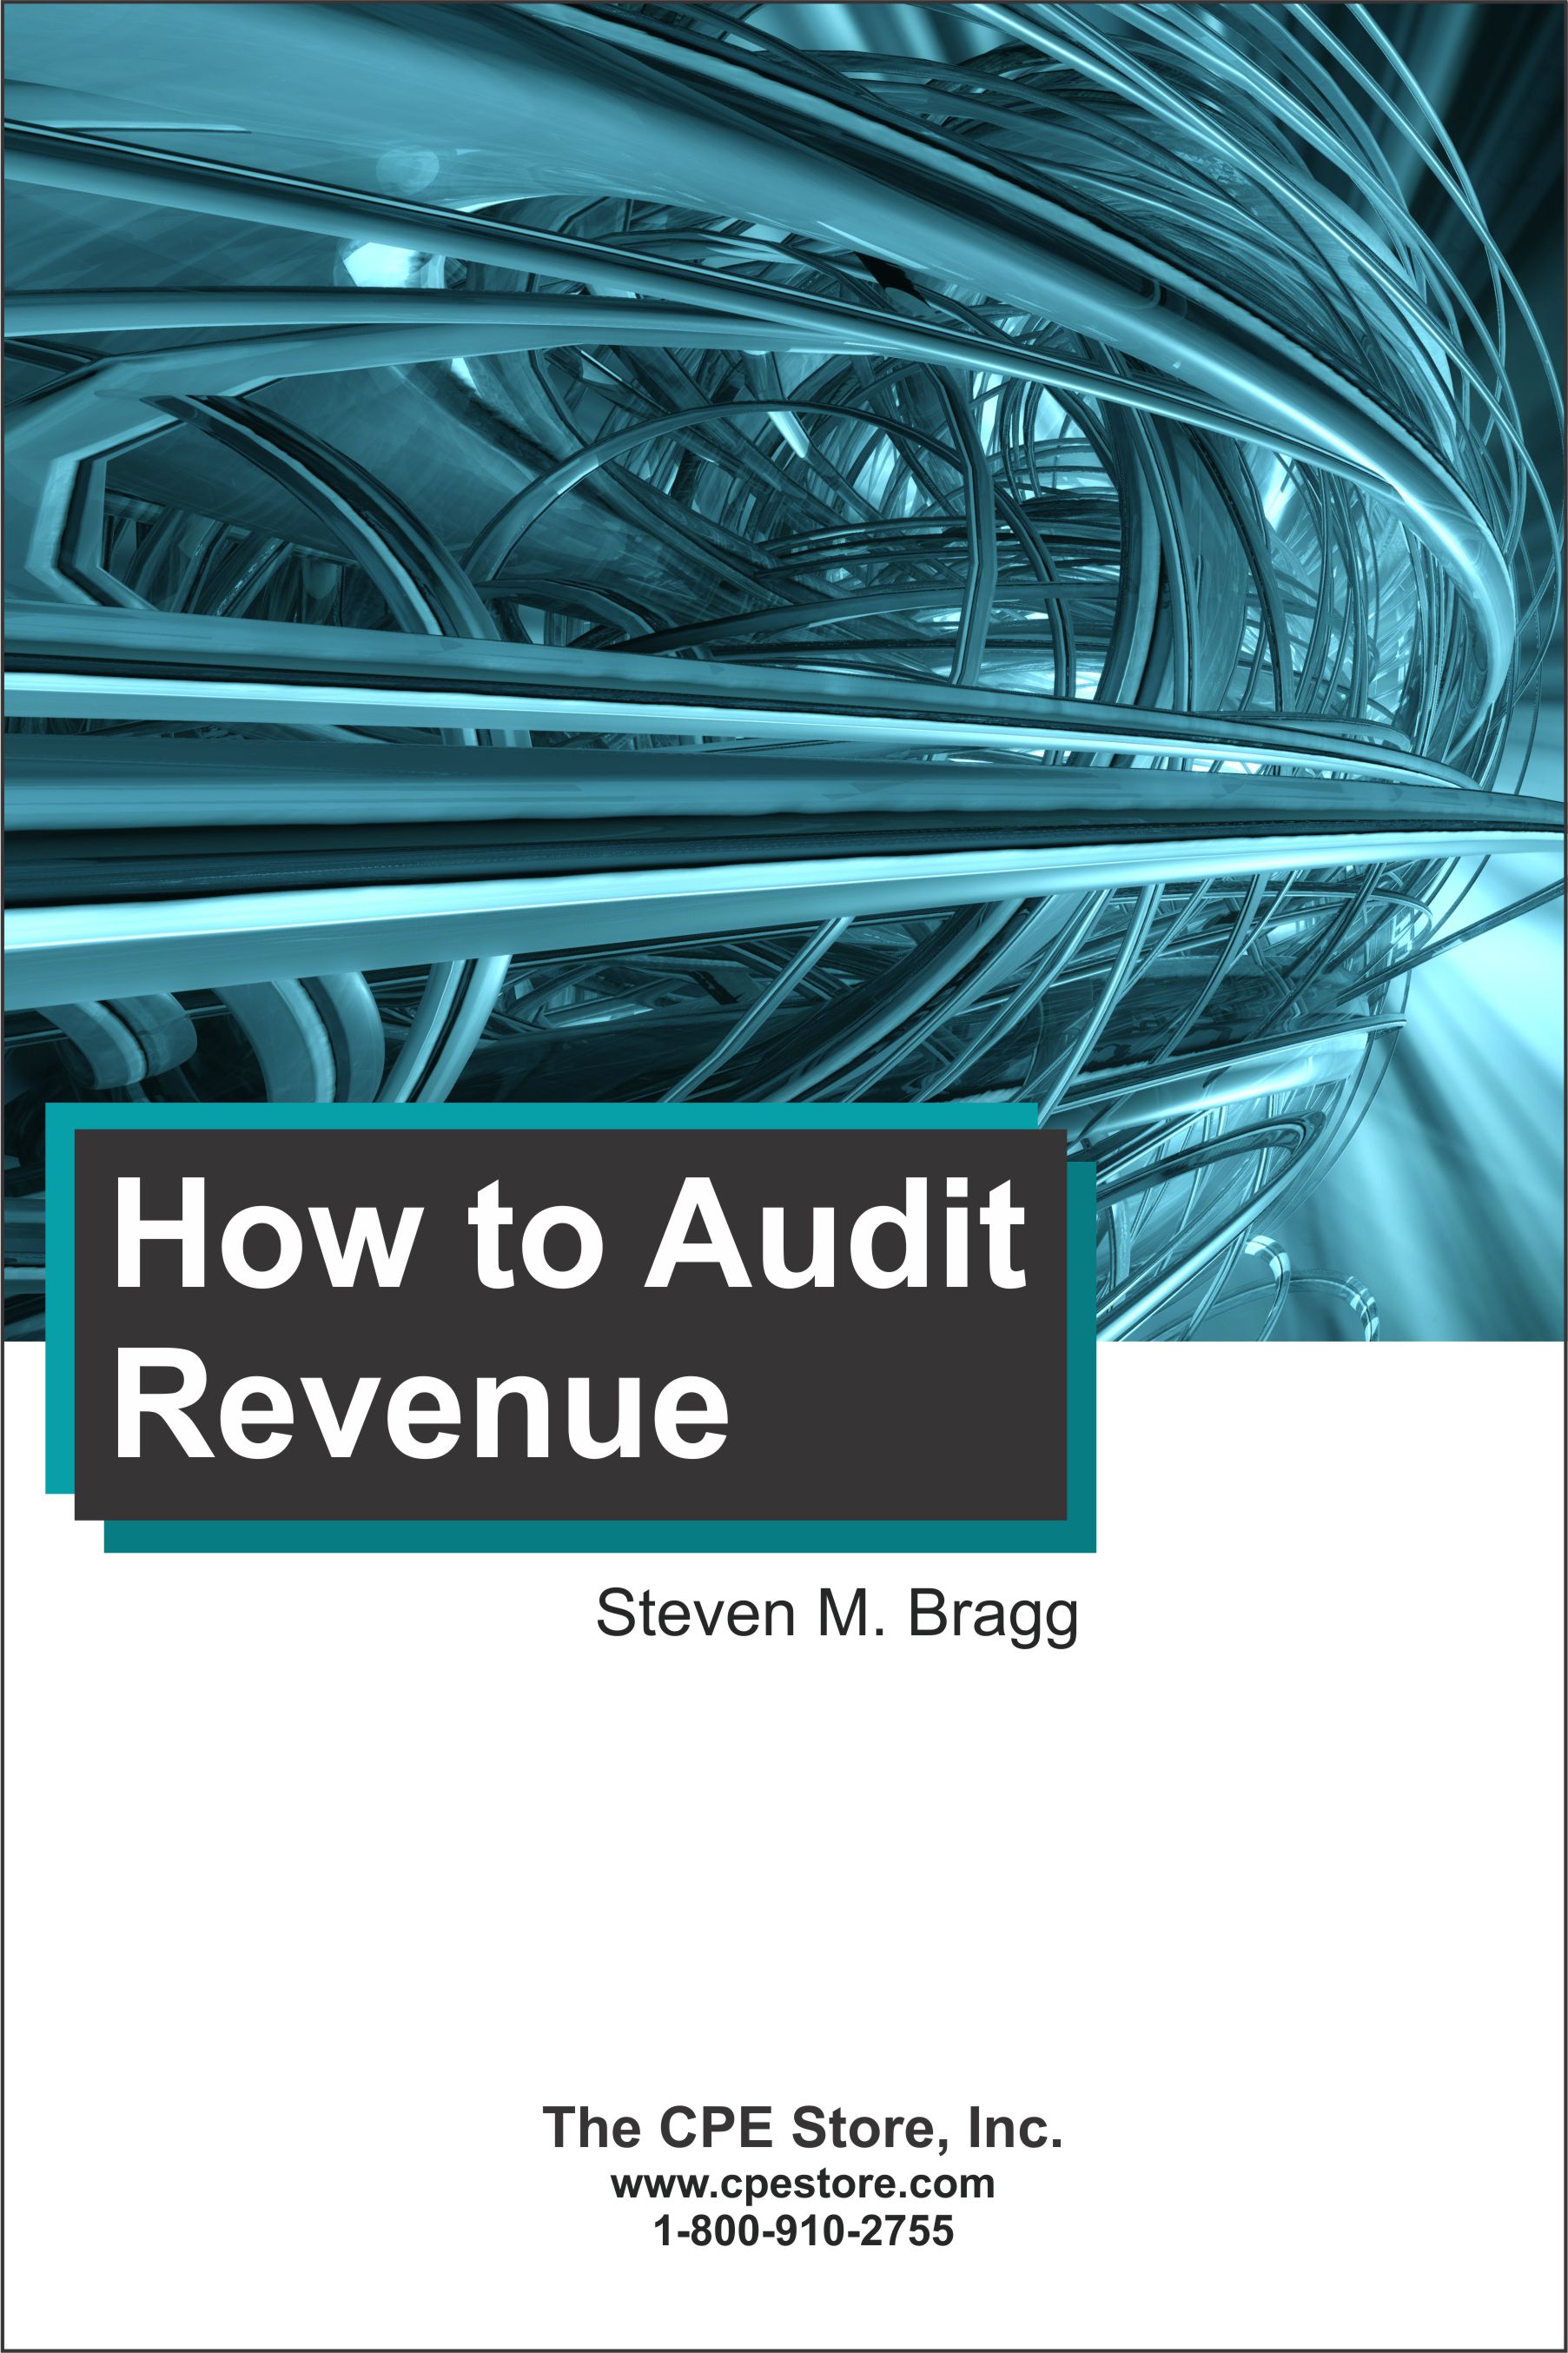 How to Audit Revenue